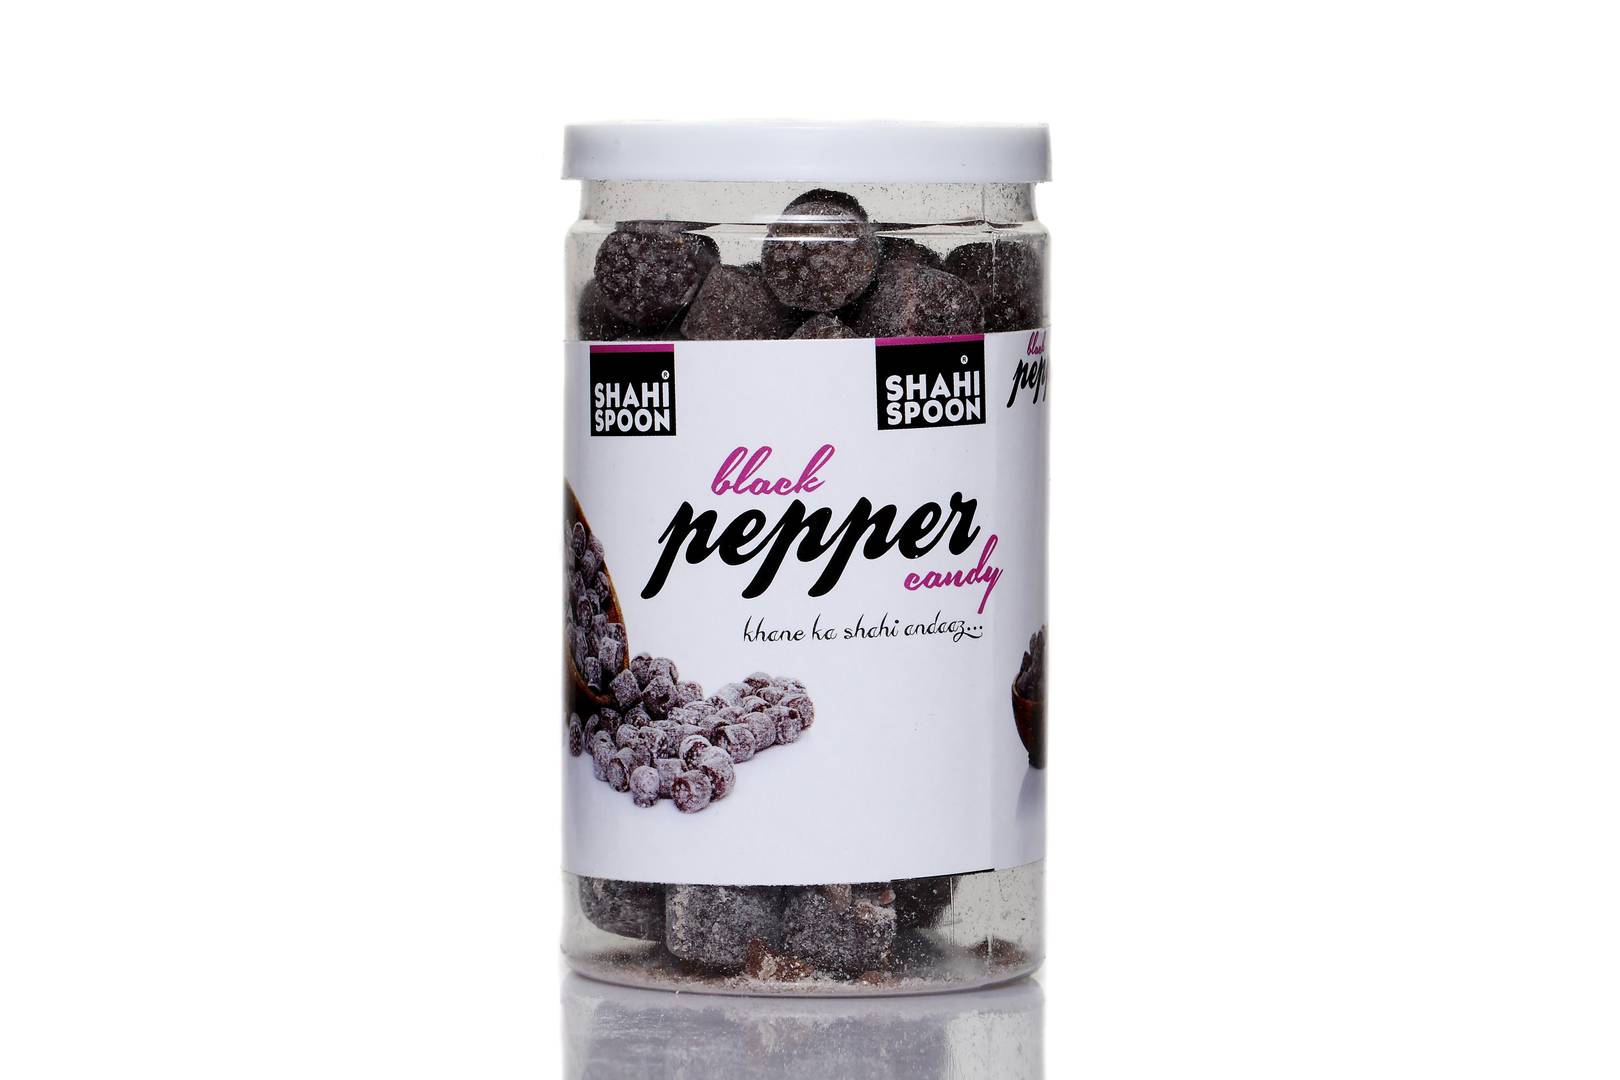 Shahi Spoon Black Pepper (Kali Mirchi) Candy,135gm-Price Incl.Shipping